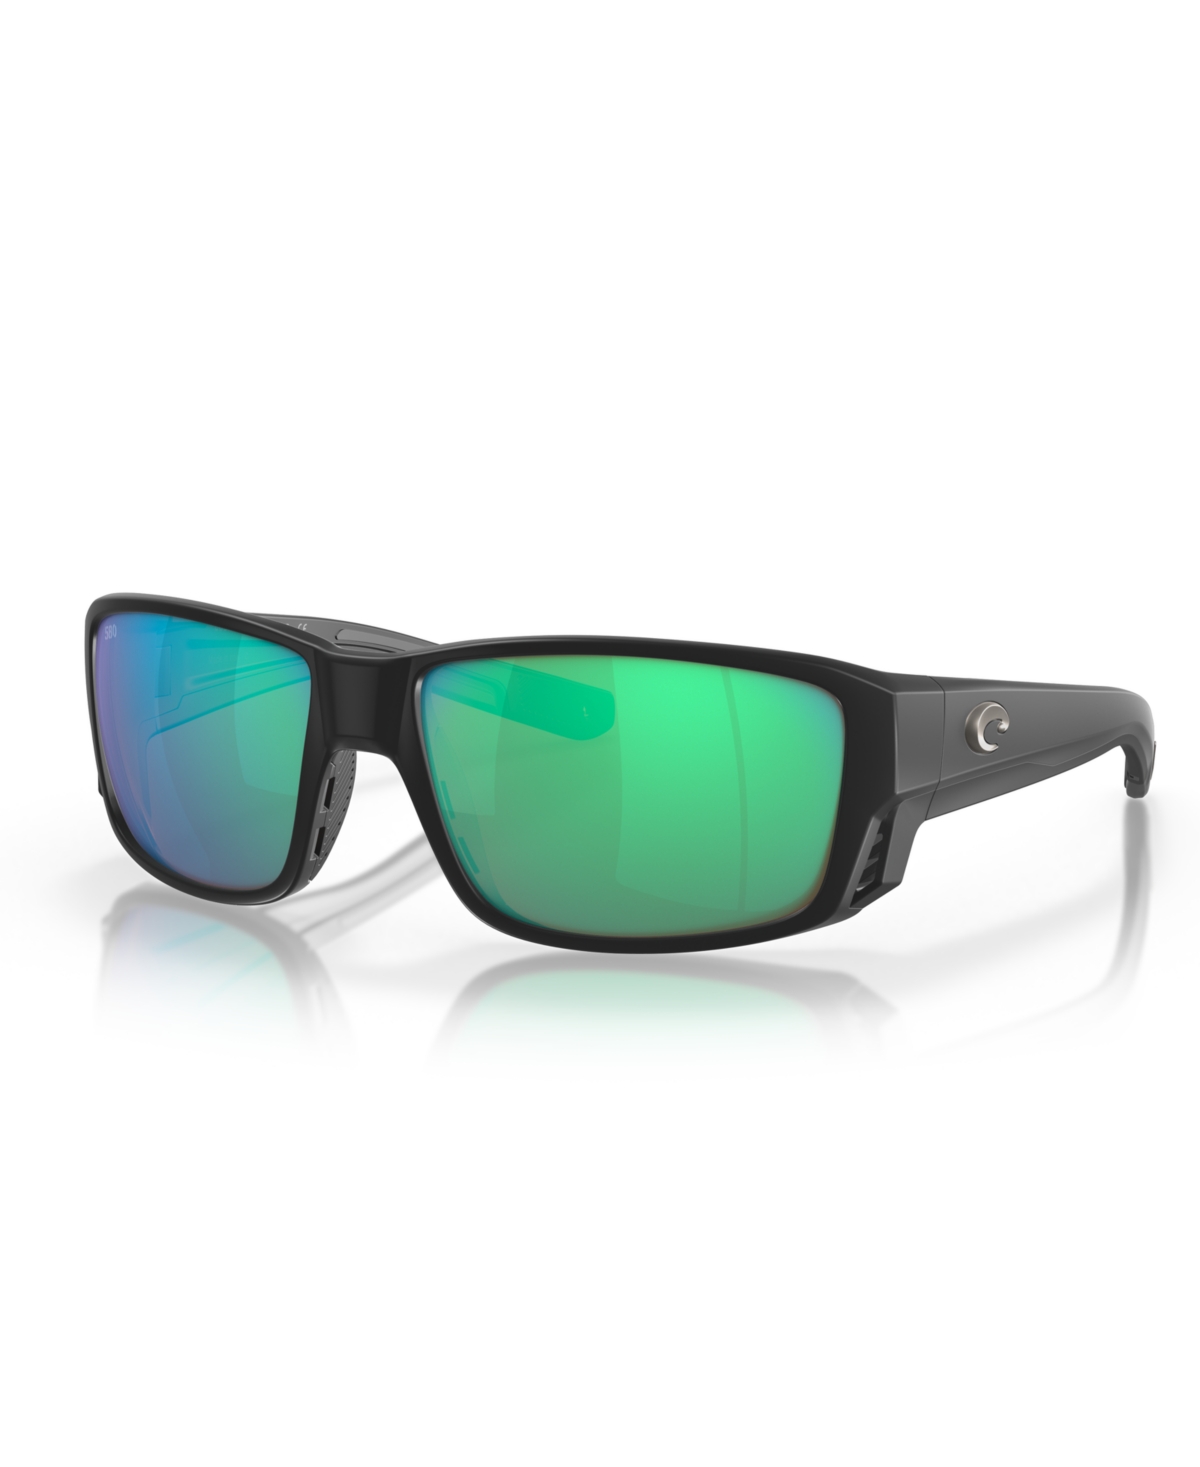 Men's Pargo Polarized Sunglasses, Mirror Polar 6S9086 - Matte Black, Gray